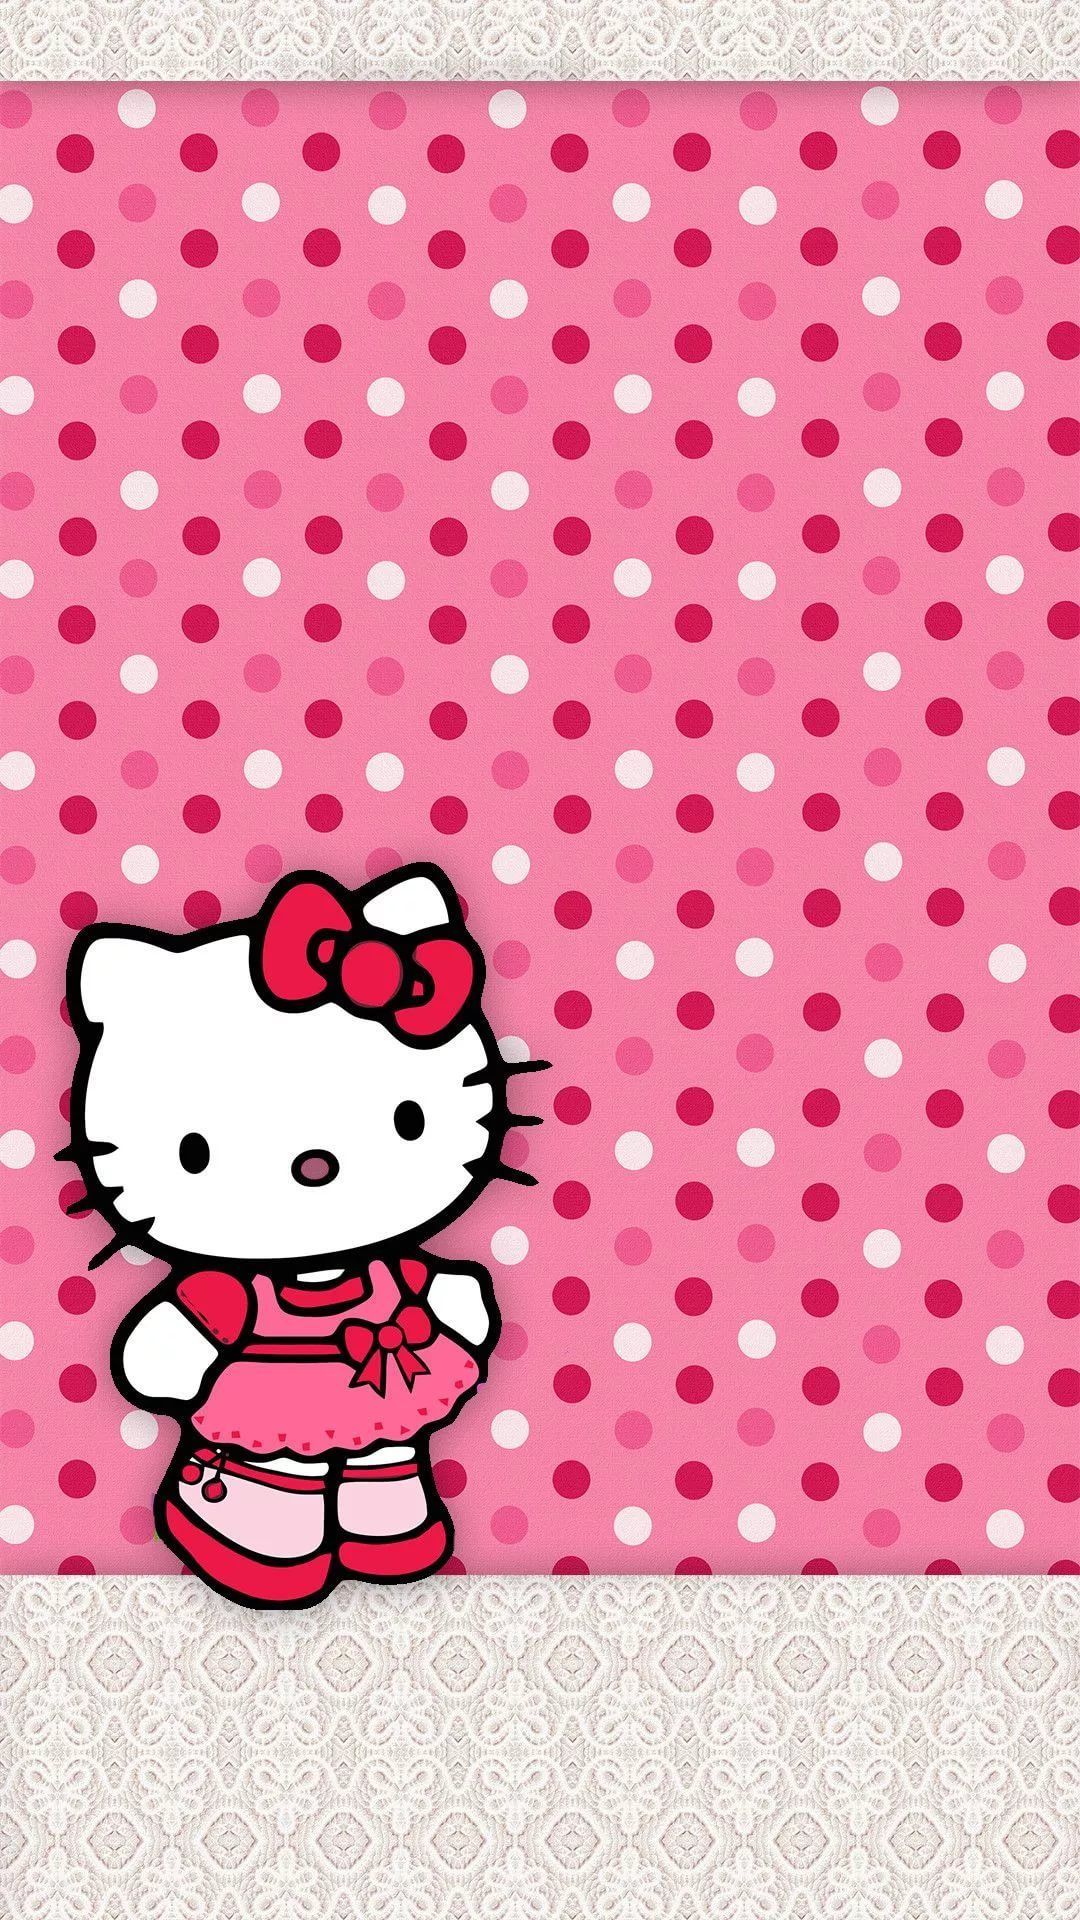 Cute Hello Kitty Cell Phone Wallpaper